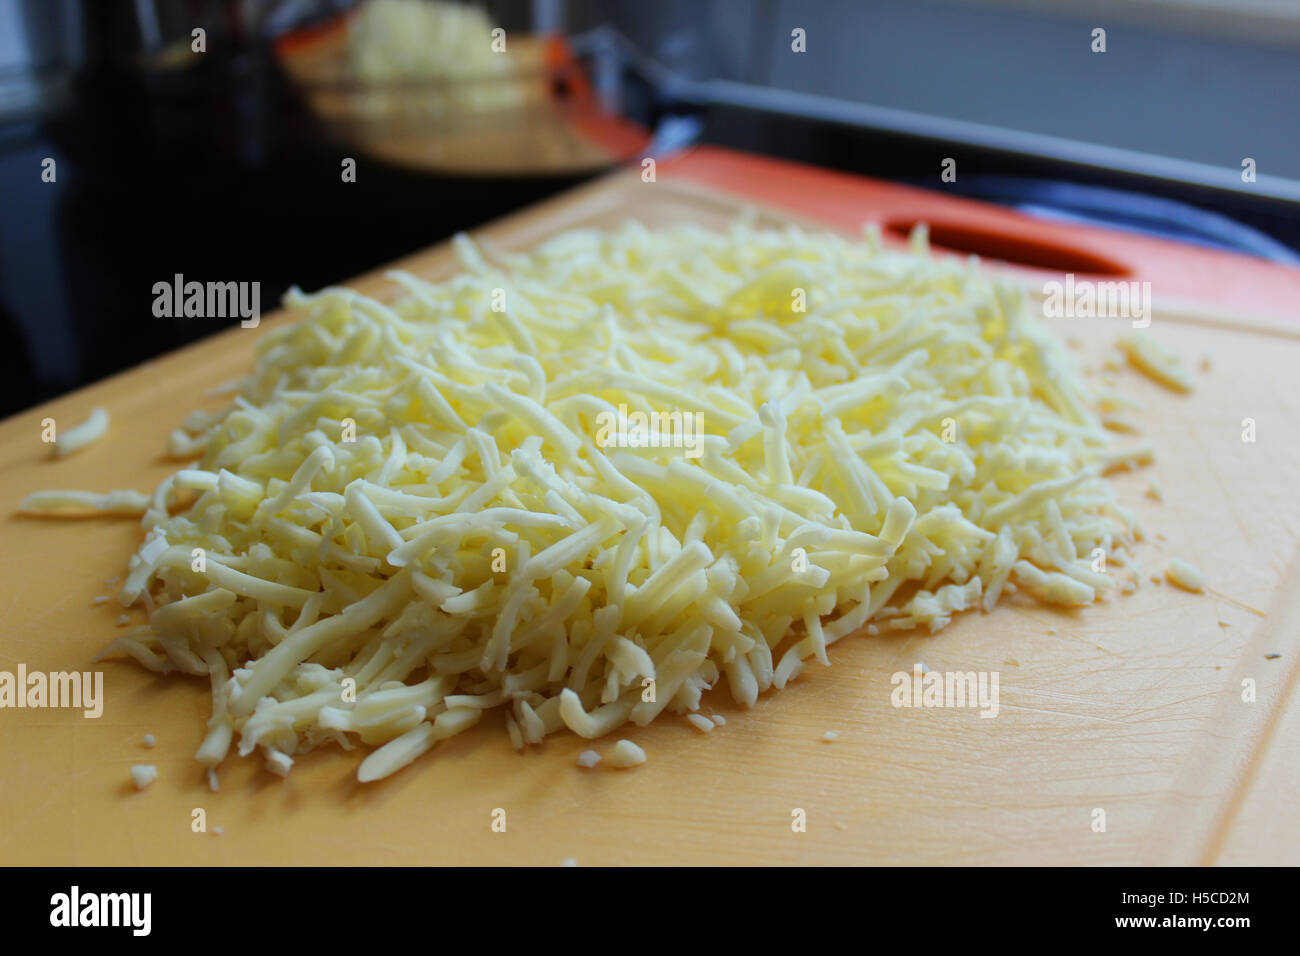 Sliced mozzarella on a plate Stock Photo